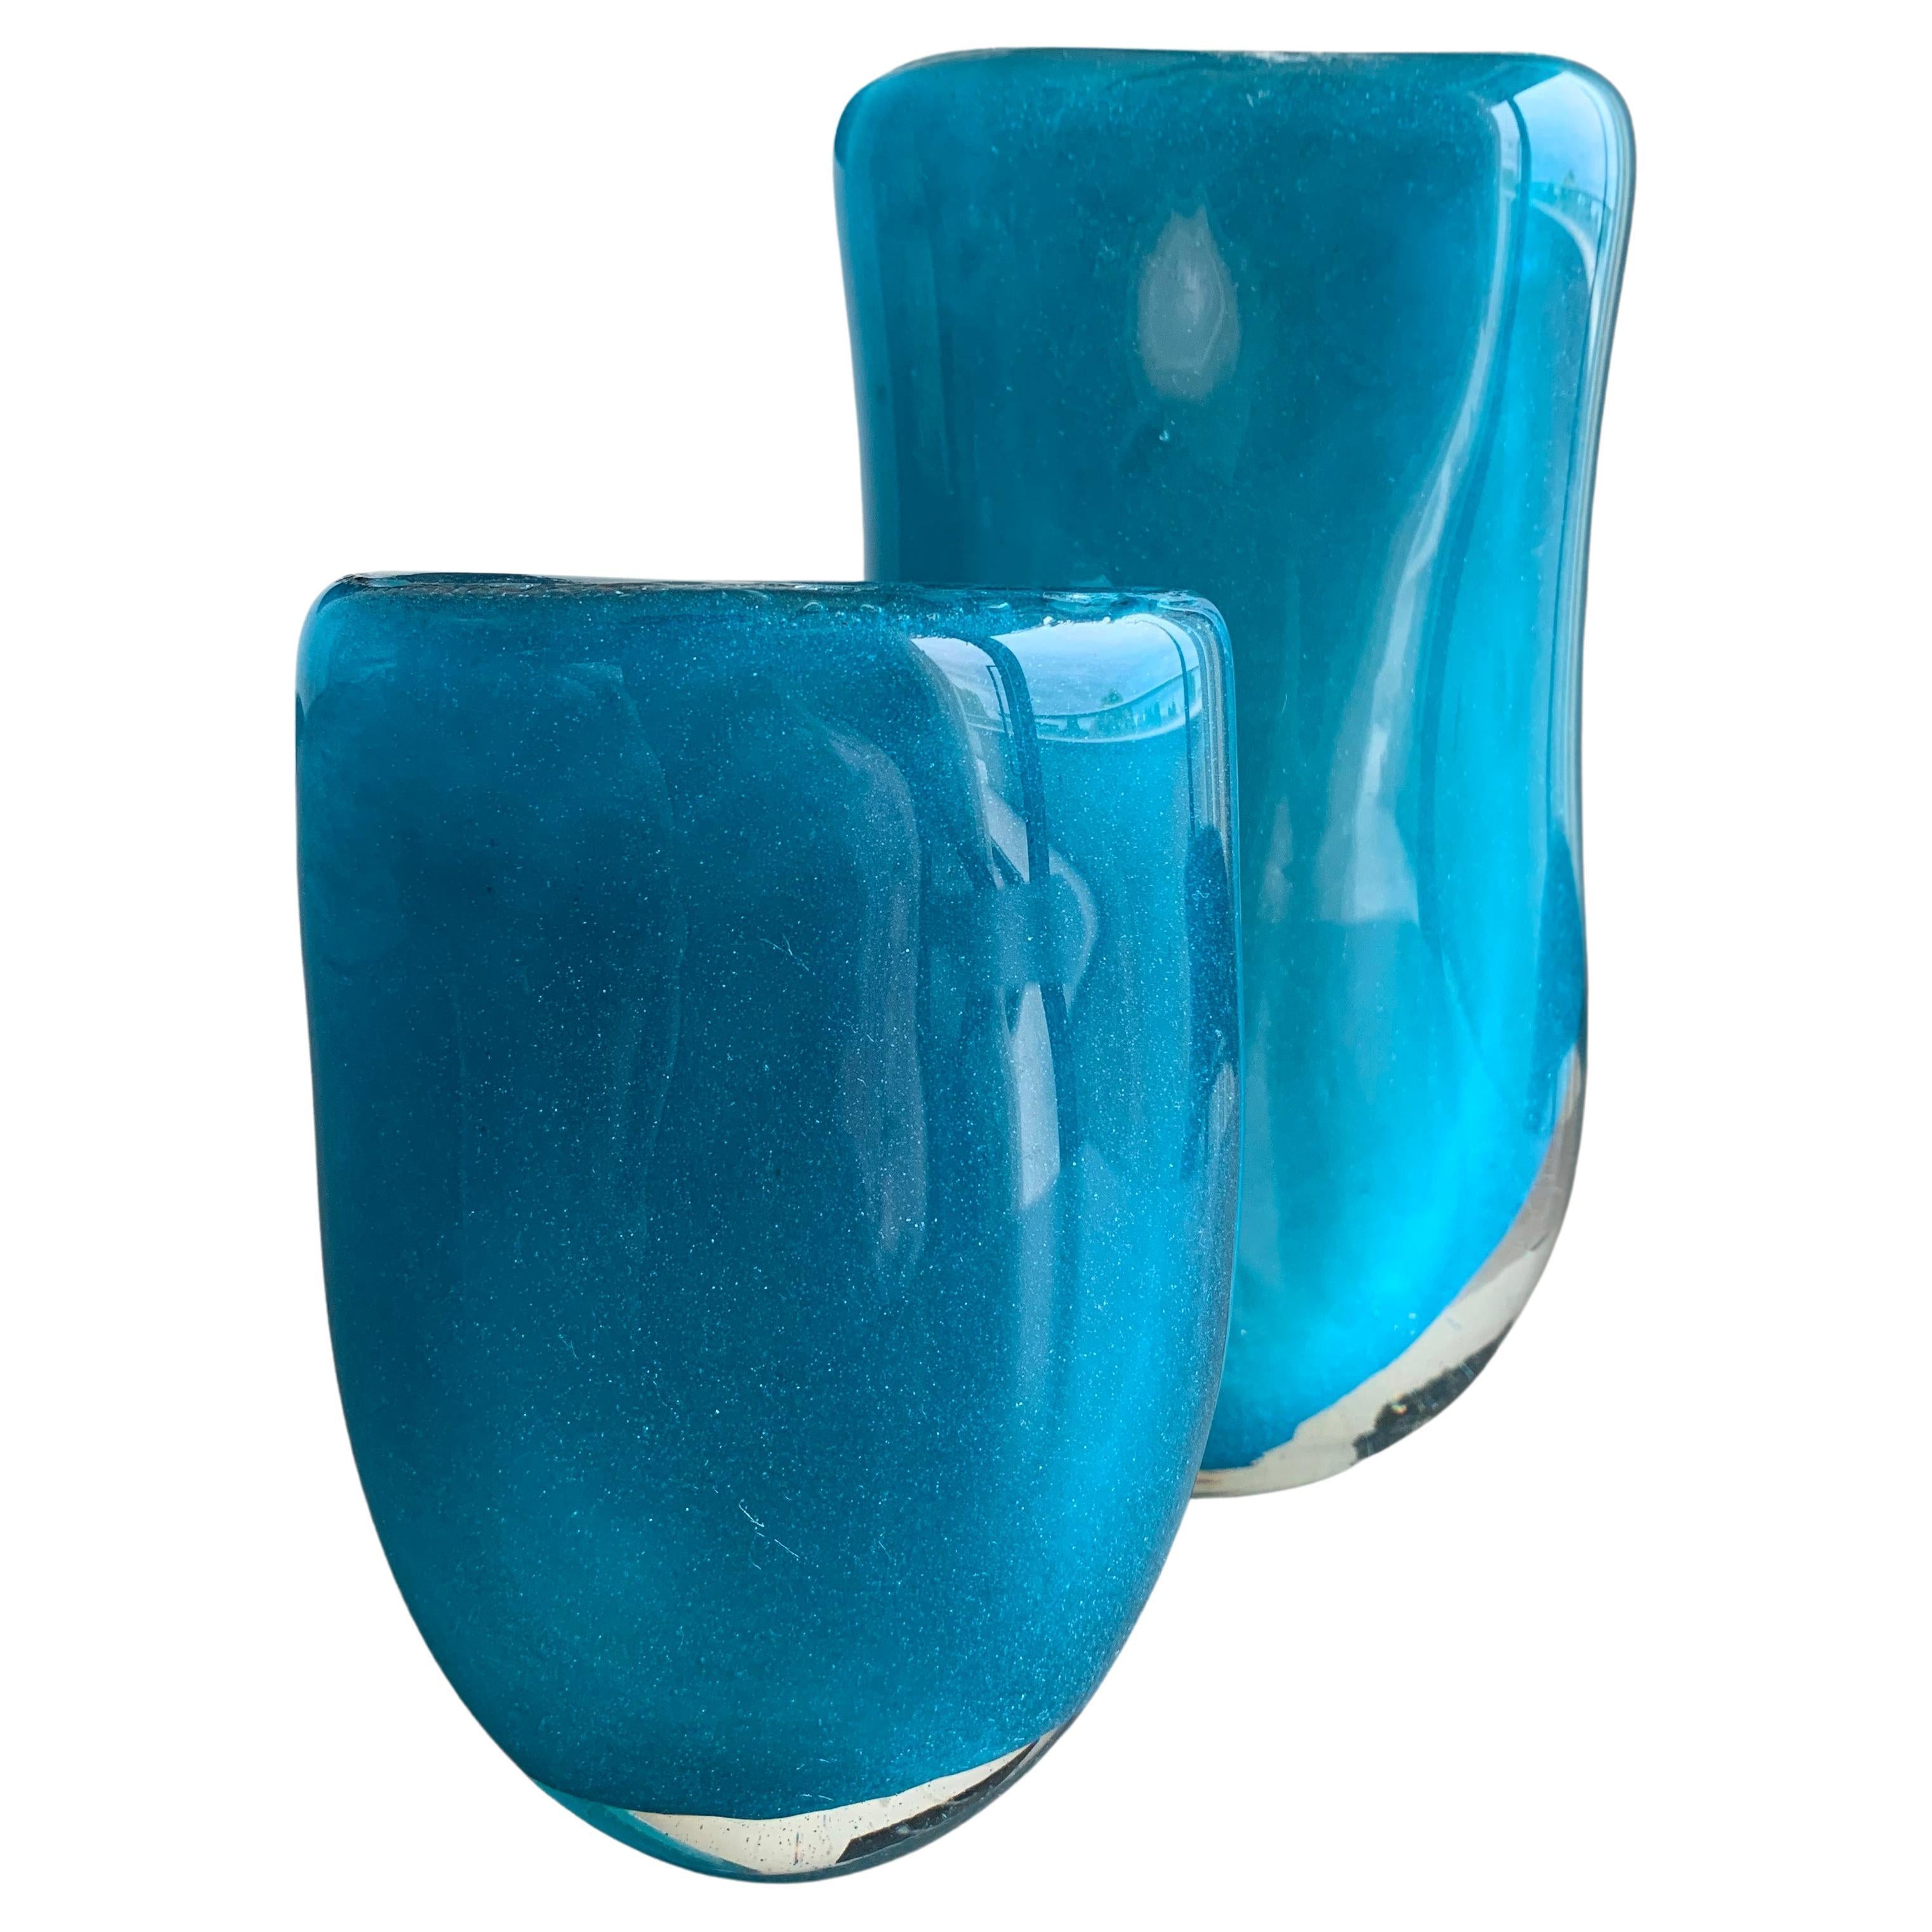 Henry Dean, Belgian,  Art Glass Vase, Turquoise, Handblown - Pair 